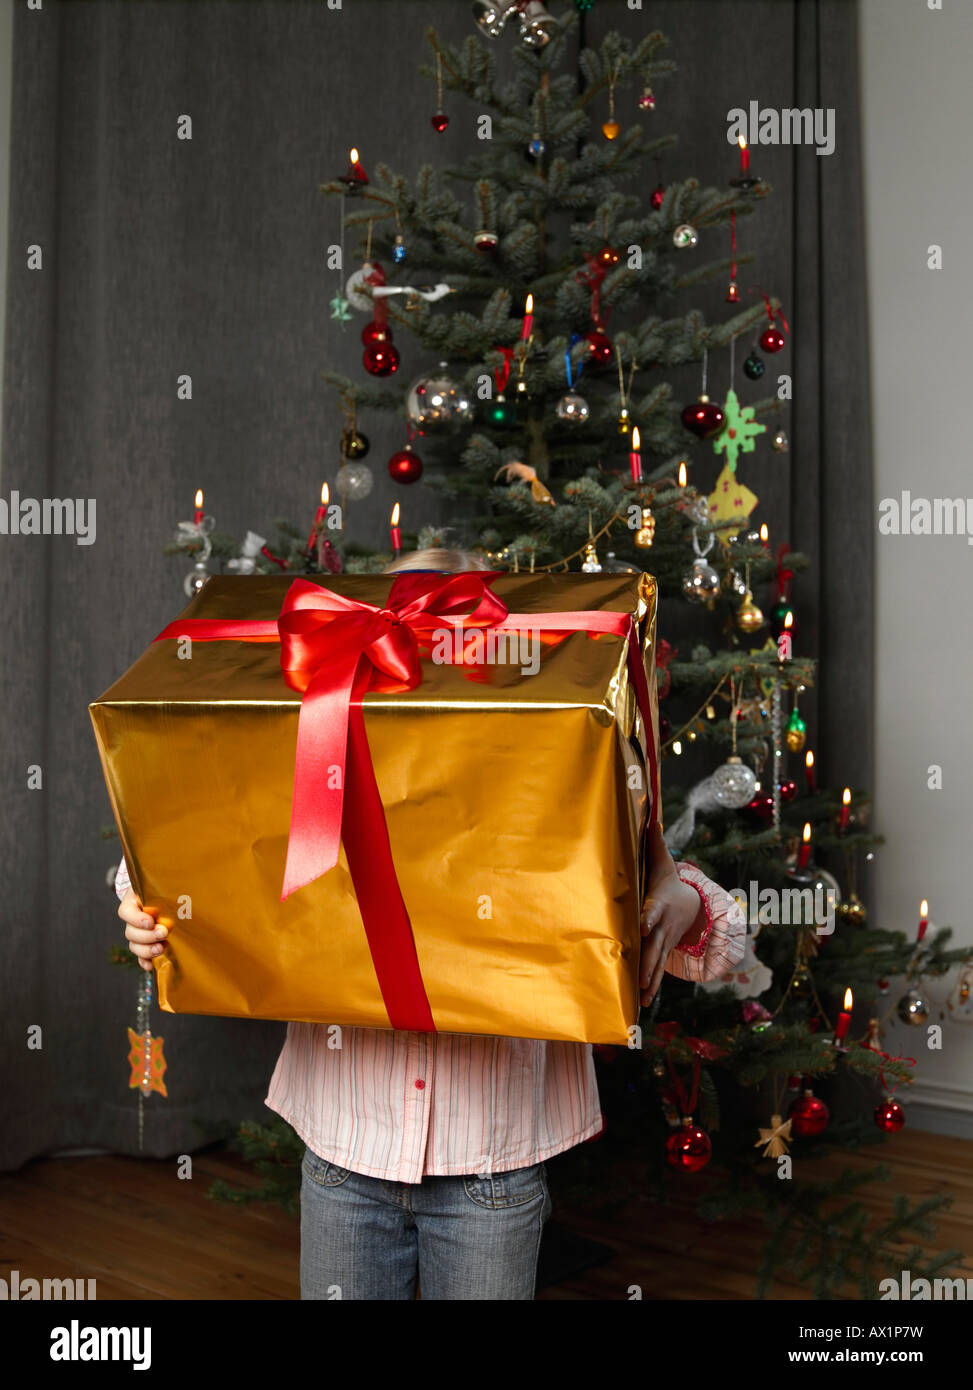 Un enfant tenant un gros cadeau de Noël Banque D'Images